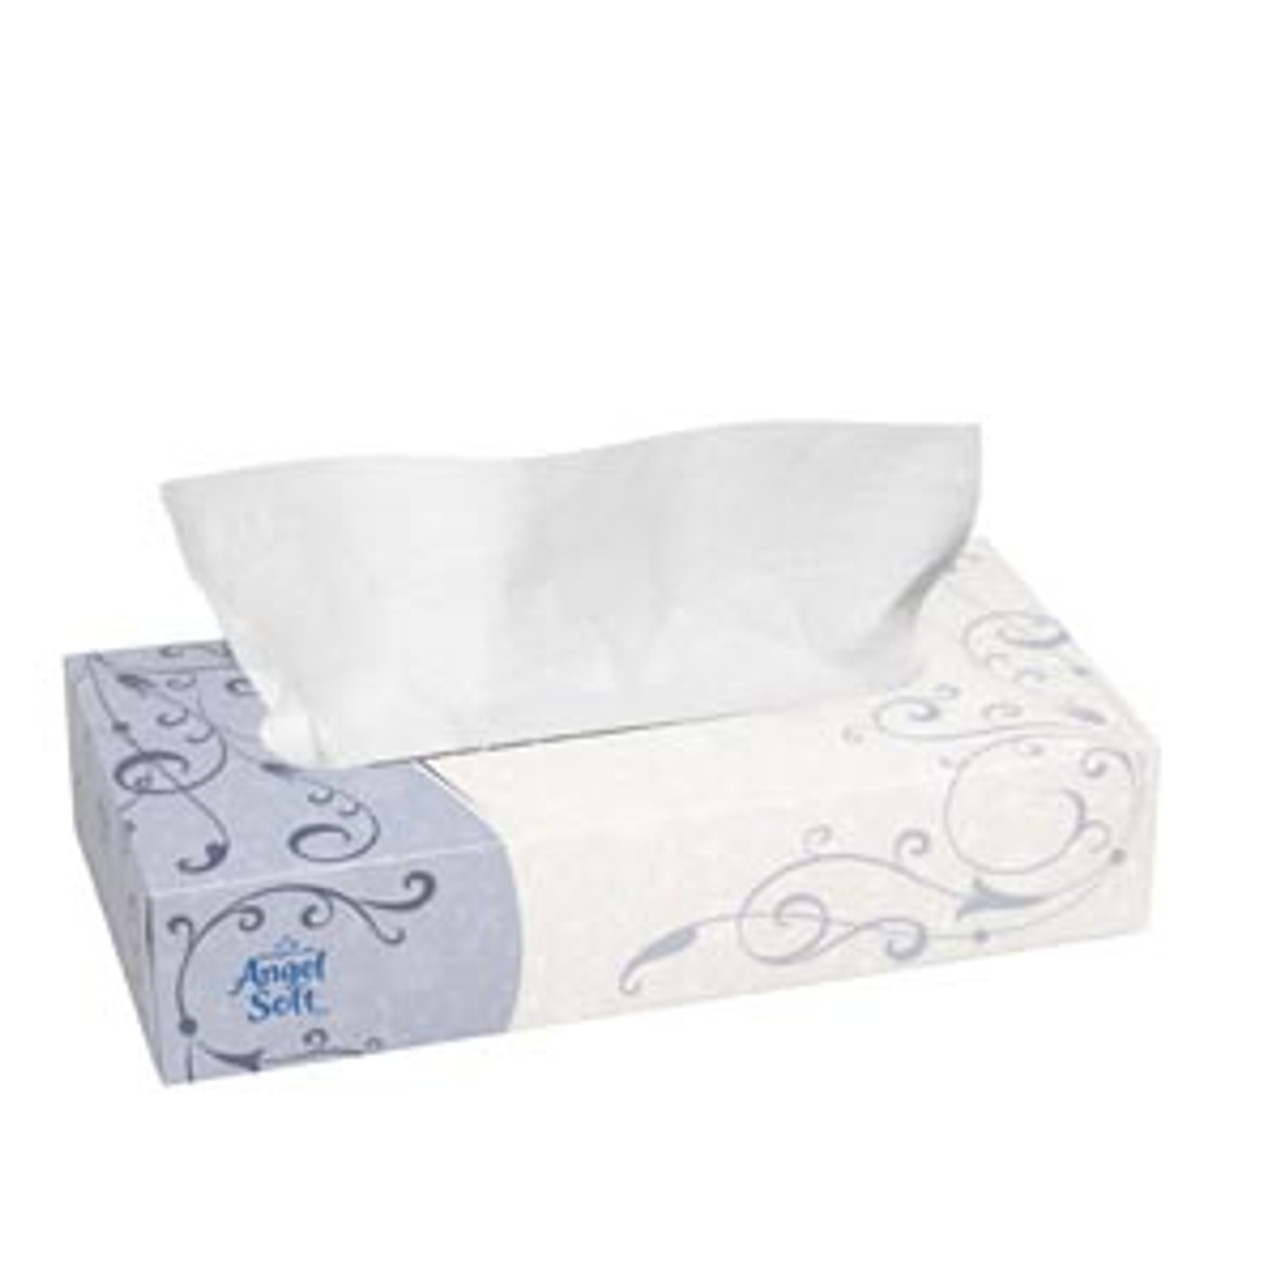 Angel Soft PS Premium Embossed Bathroom Tissue Roll